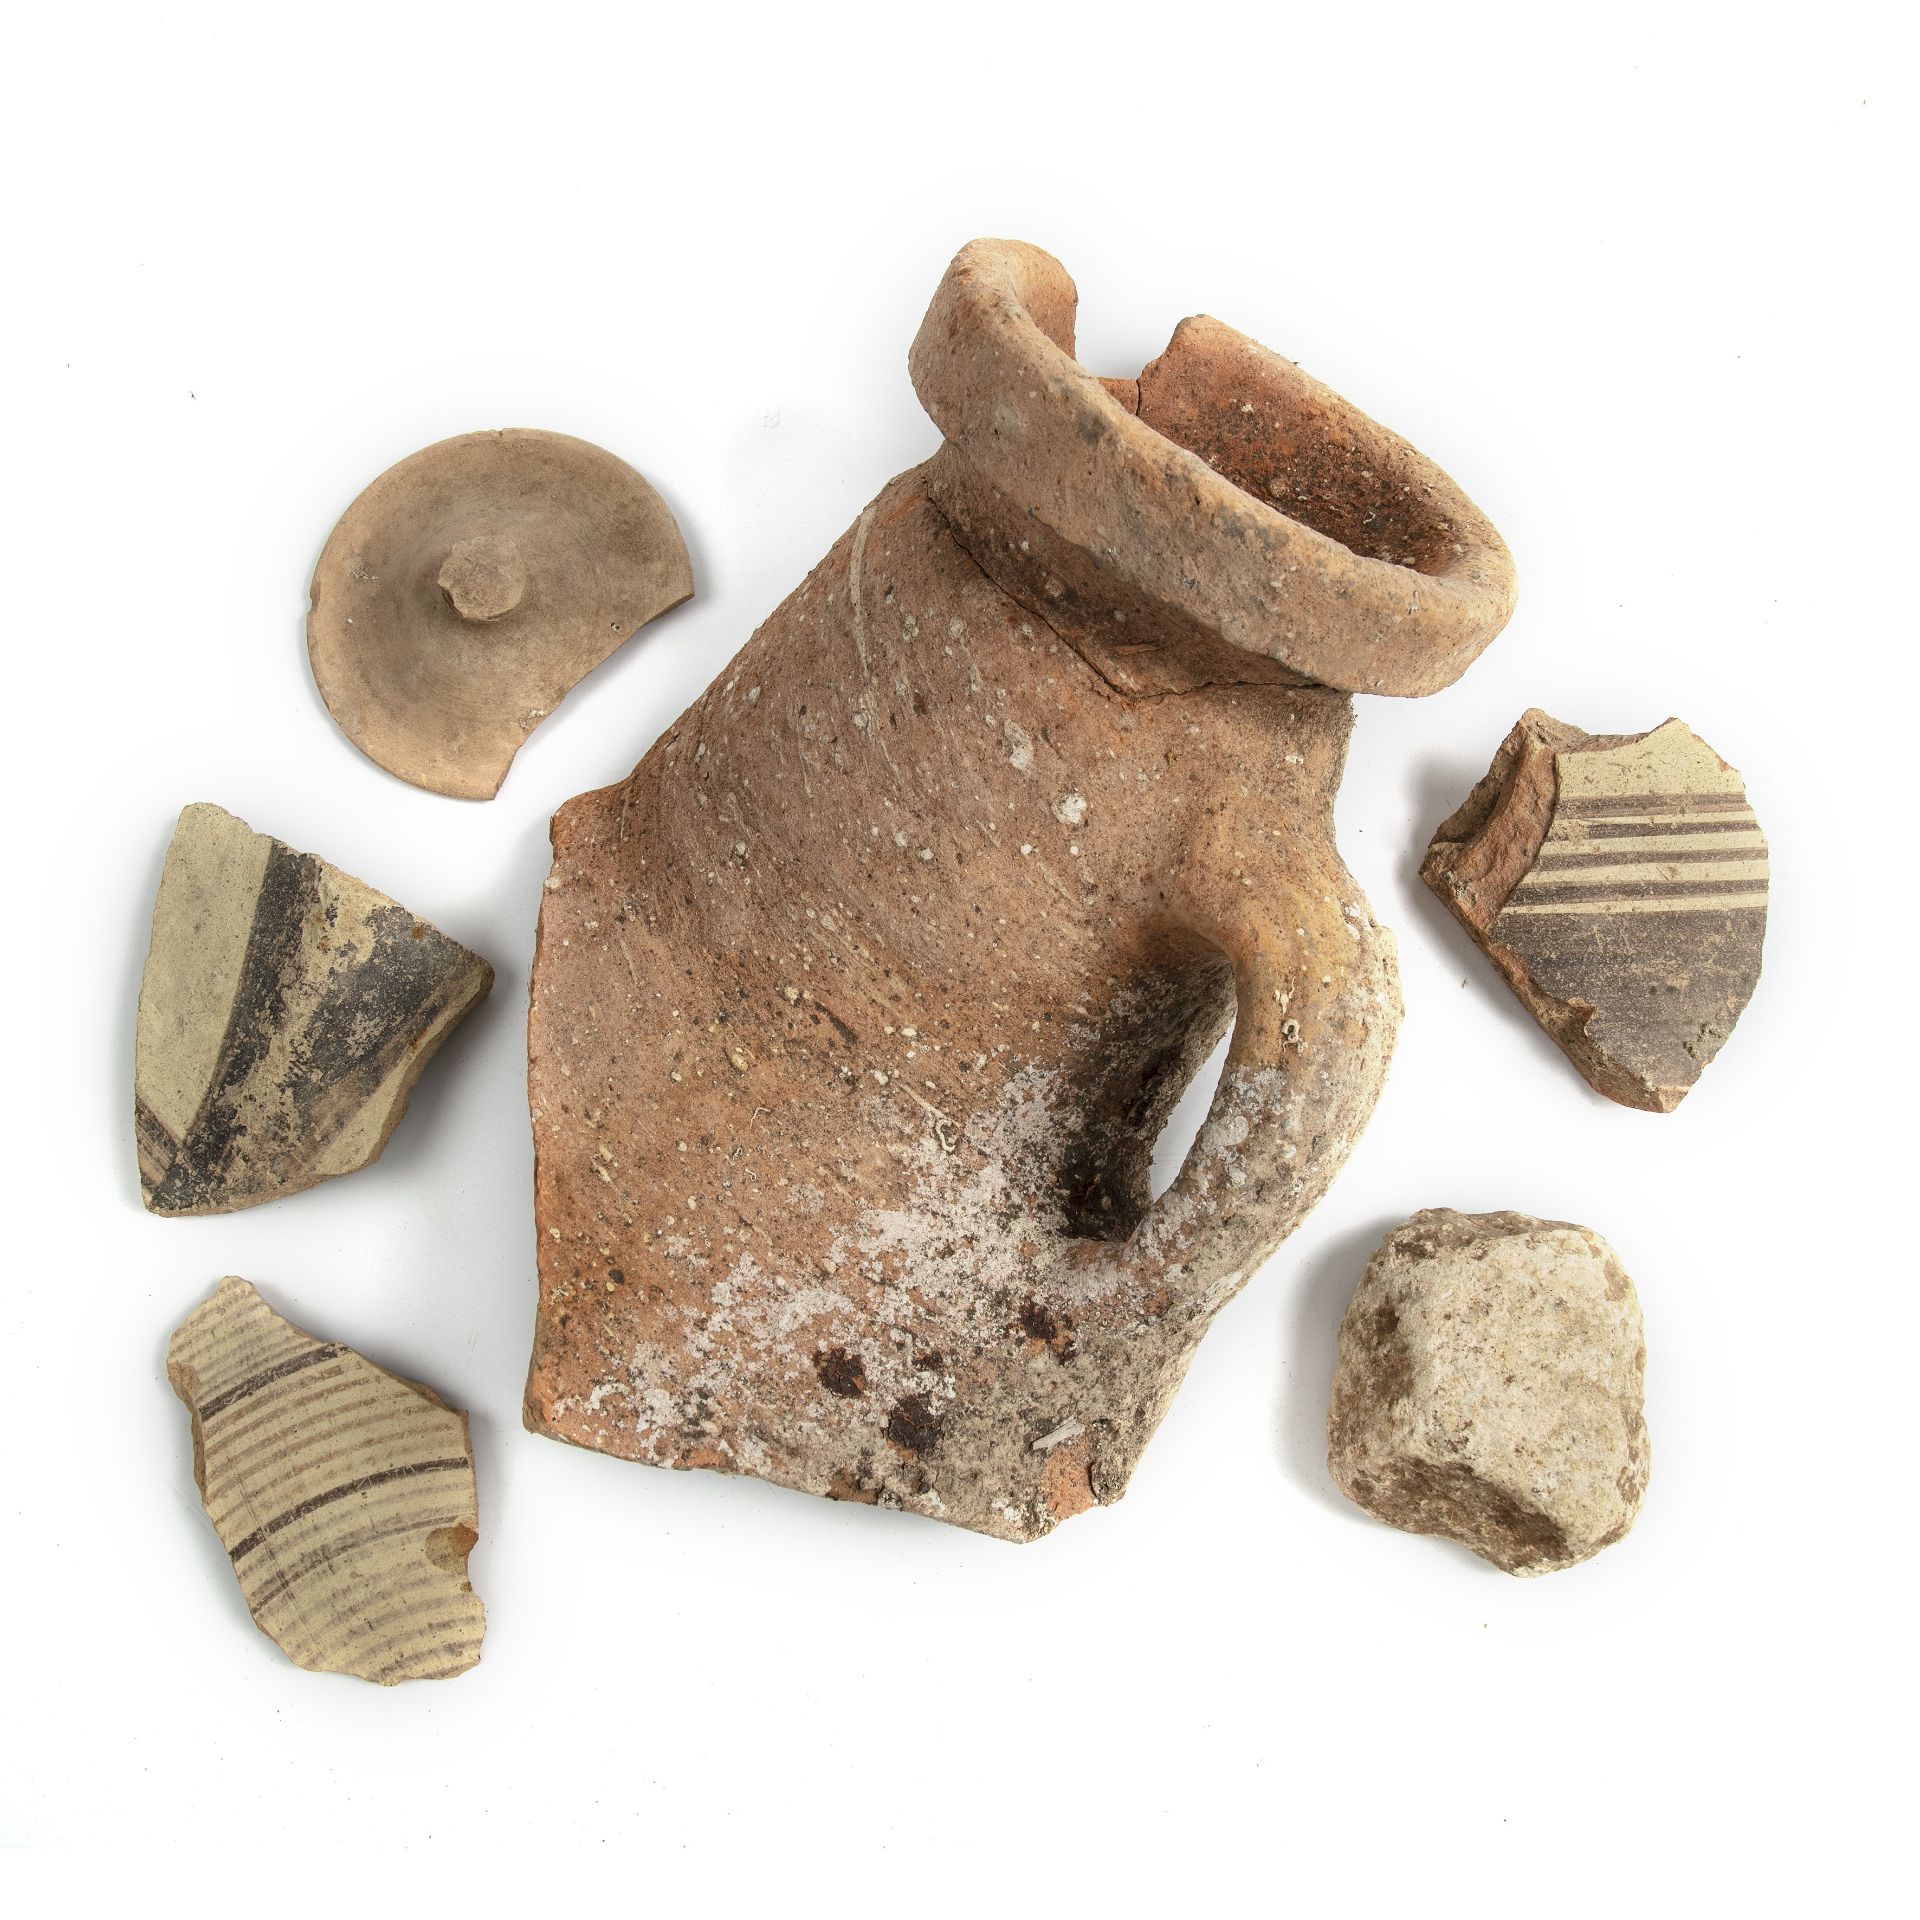 Roman Pottery shards from Leptus Magna